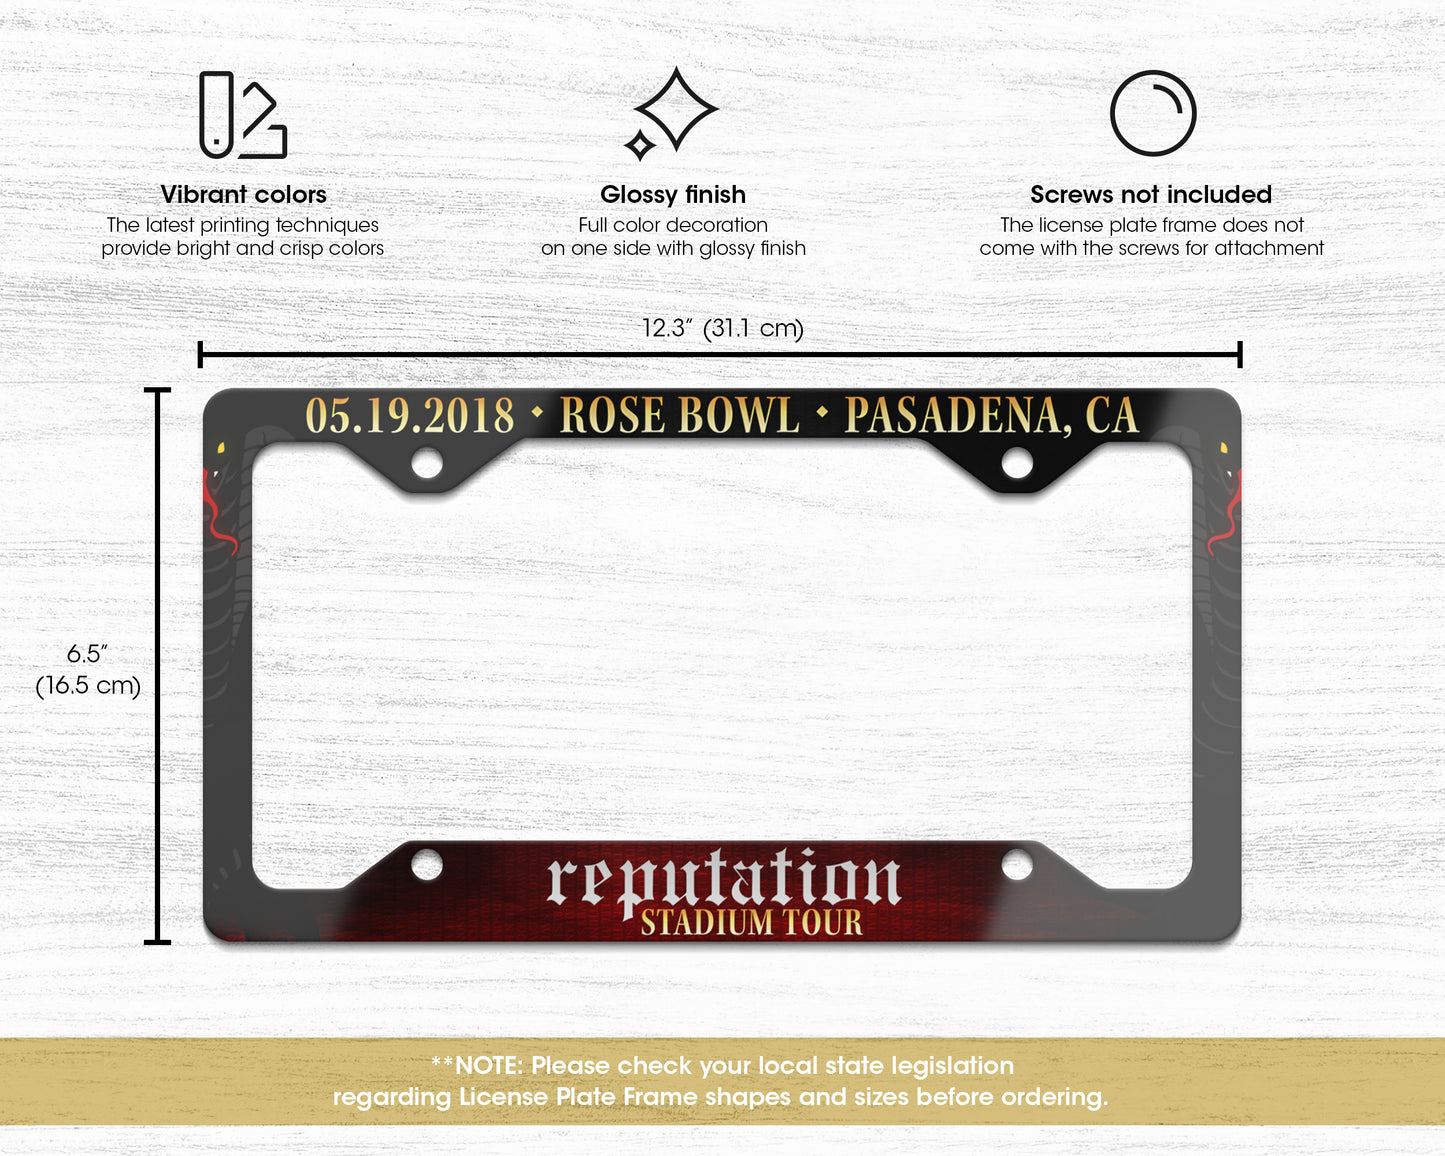 Reputation Stadium Tour license plate frame